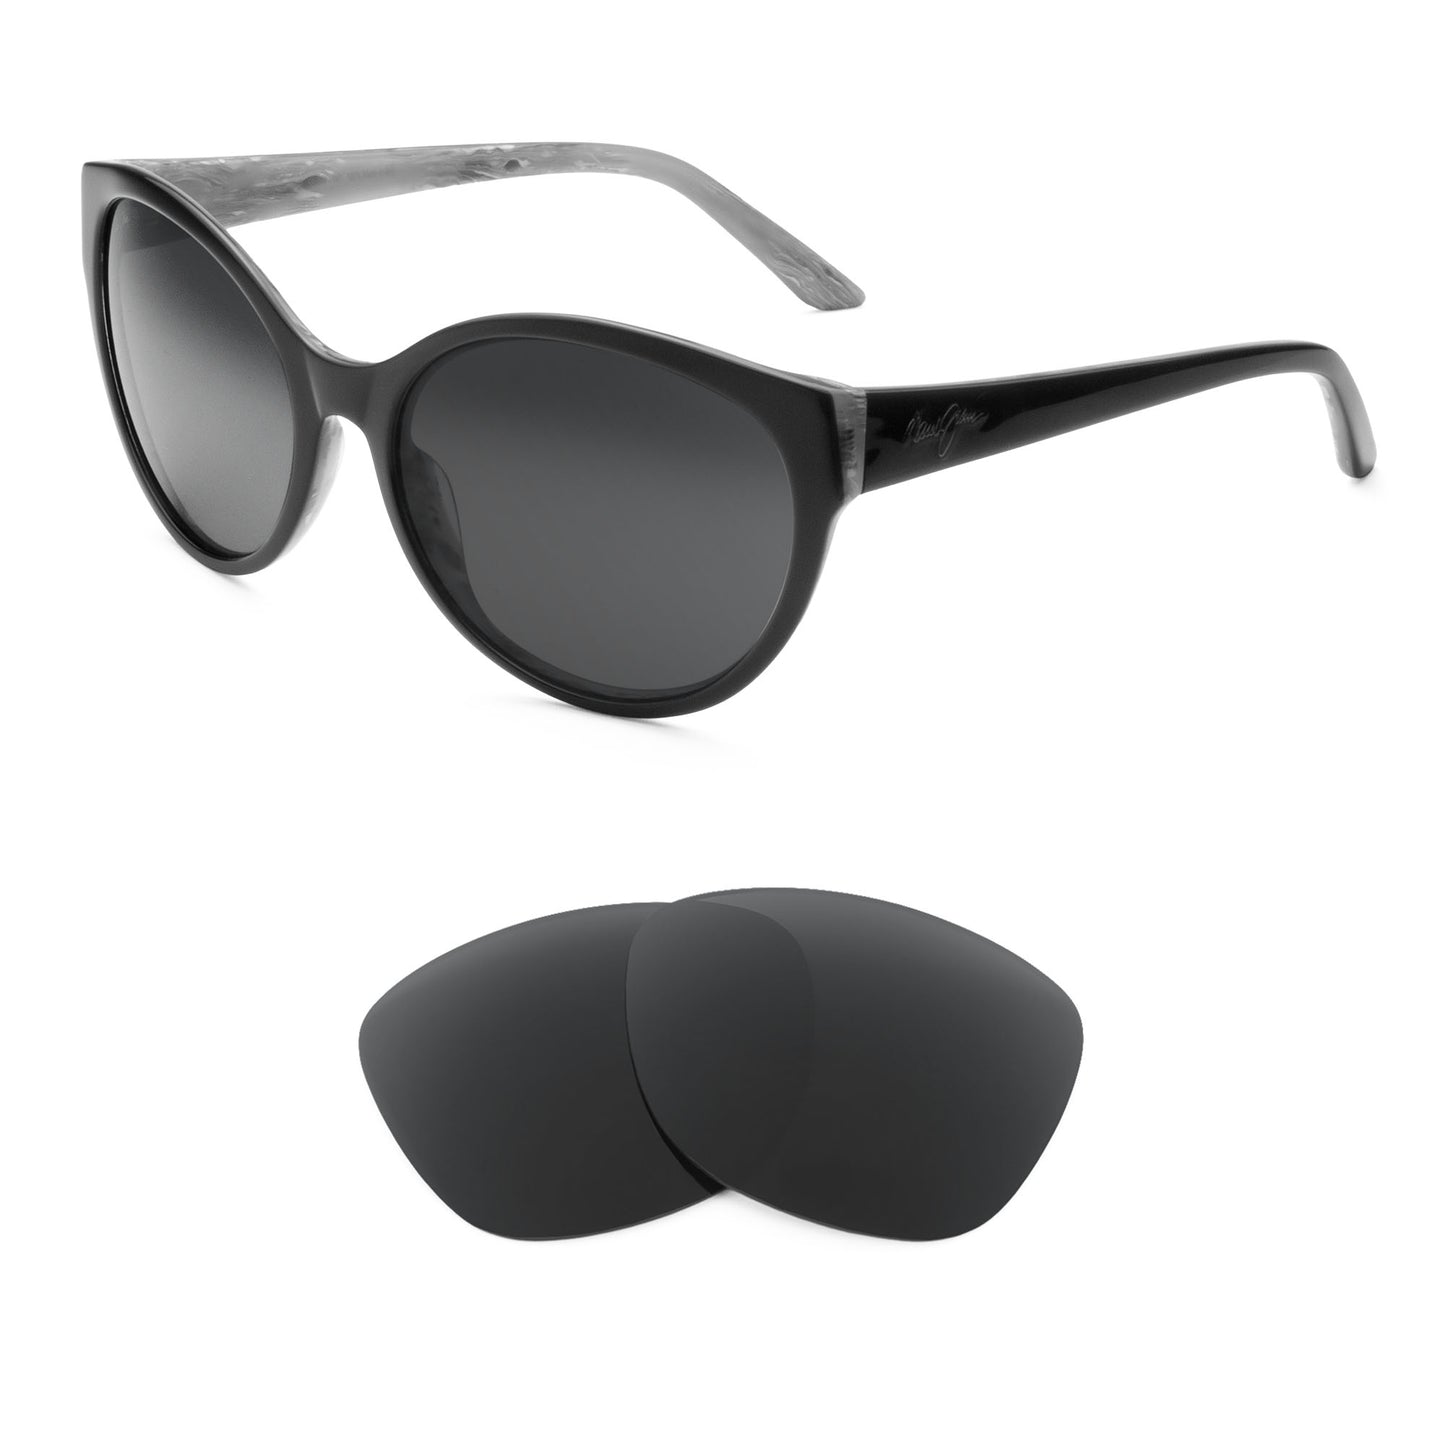 Maui Jim Venus Pools MJ100 sunglasses with replacement lenses